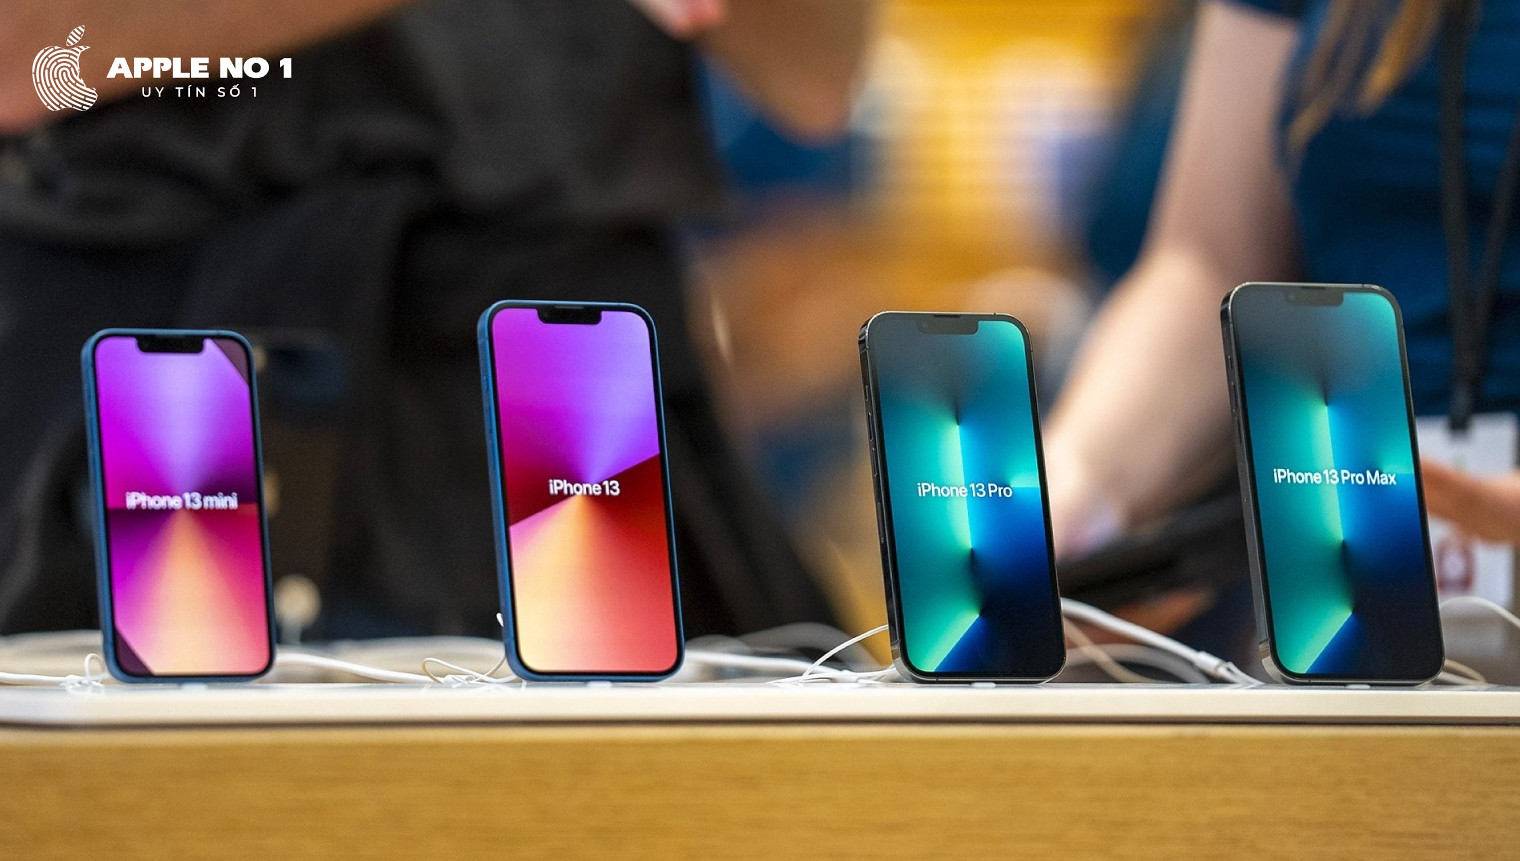 Apple du kien san xuat 220 trieu iPhone trong nam 2022